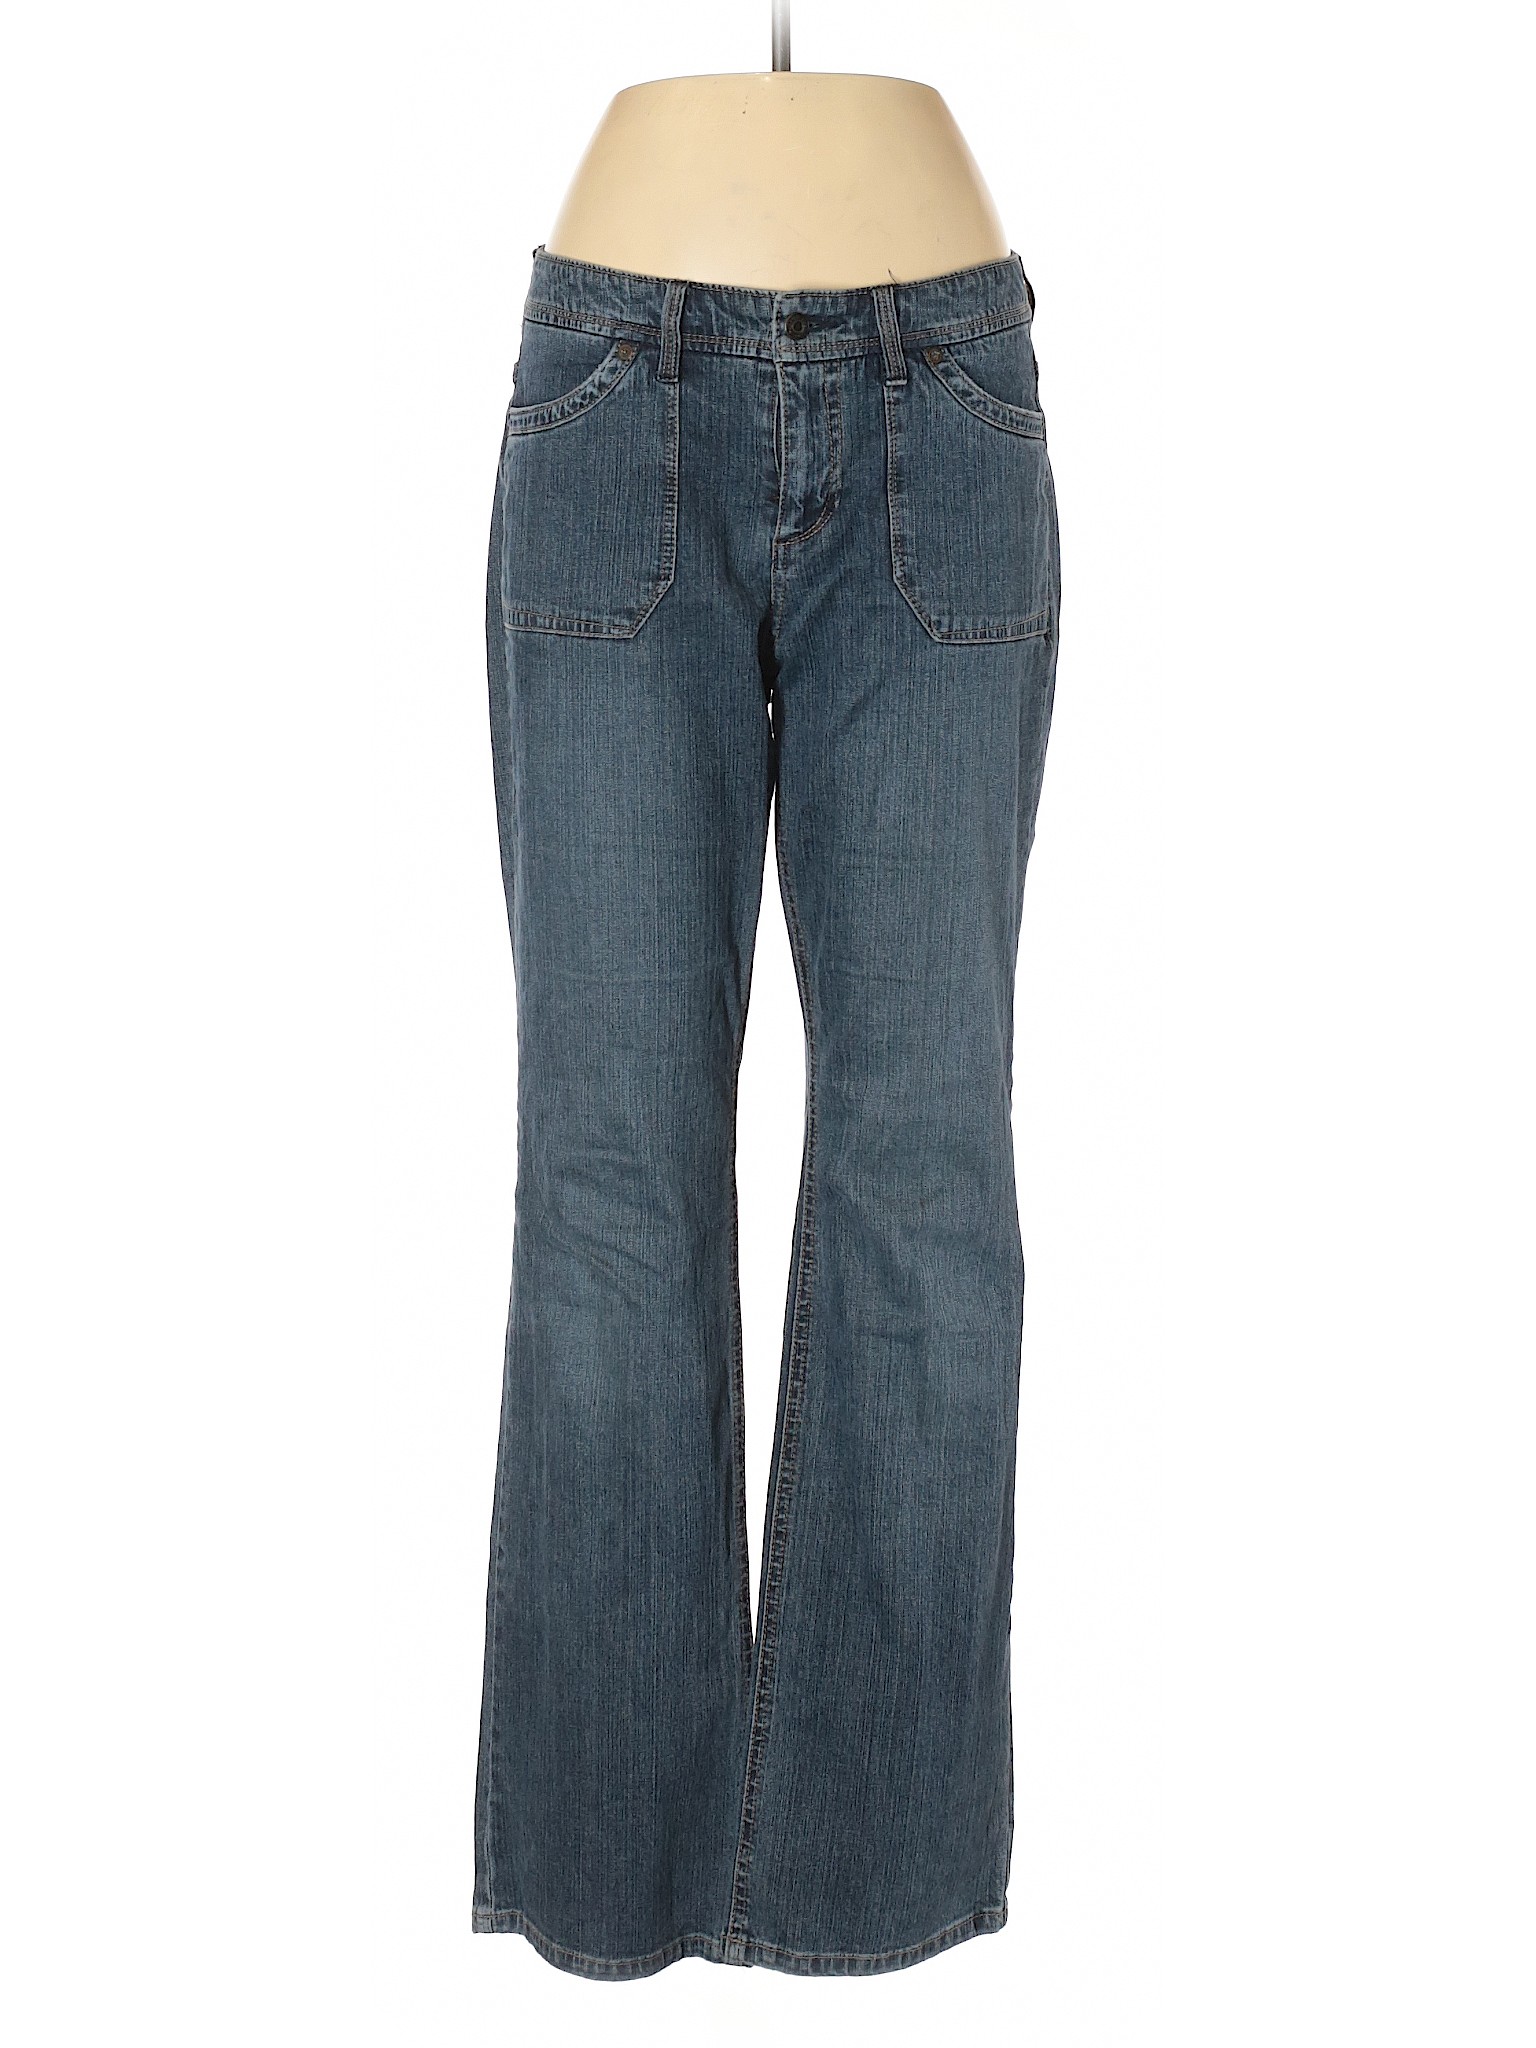 SONOMA life + style Women Blue Jeans 10 | eBay